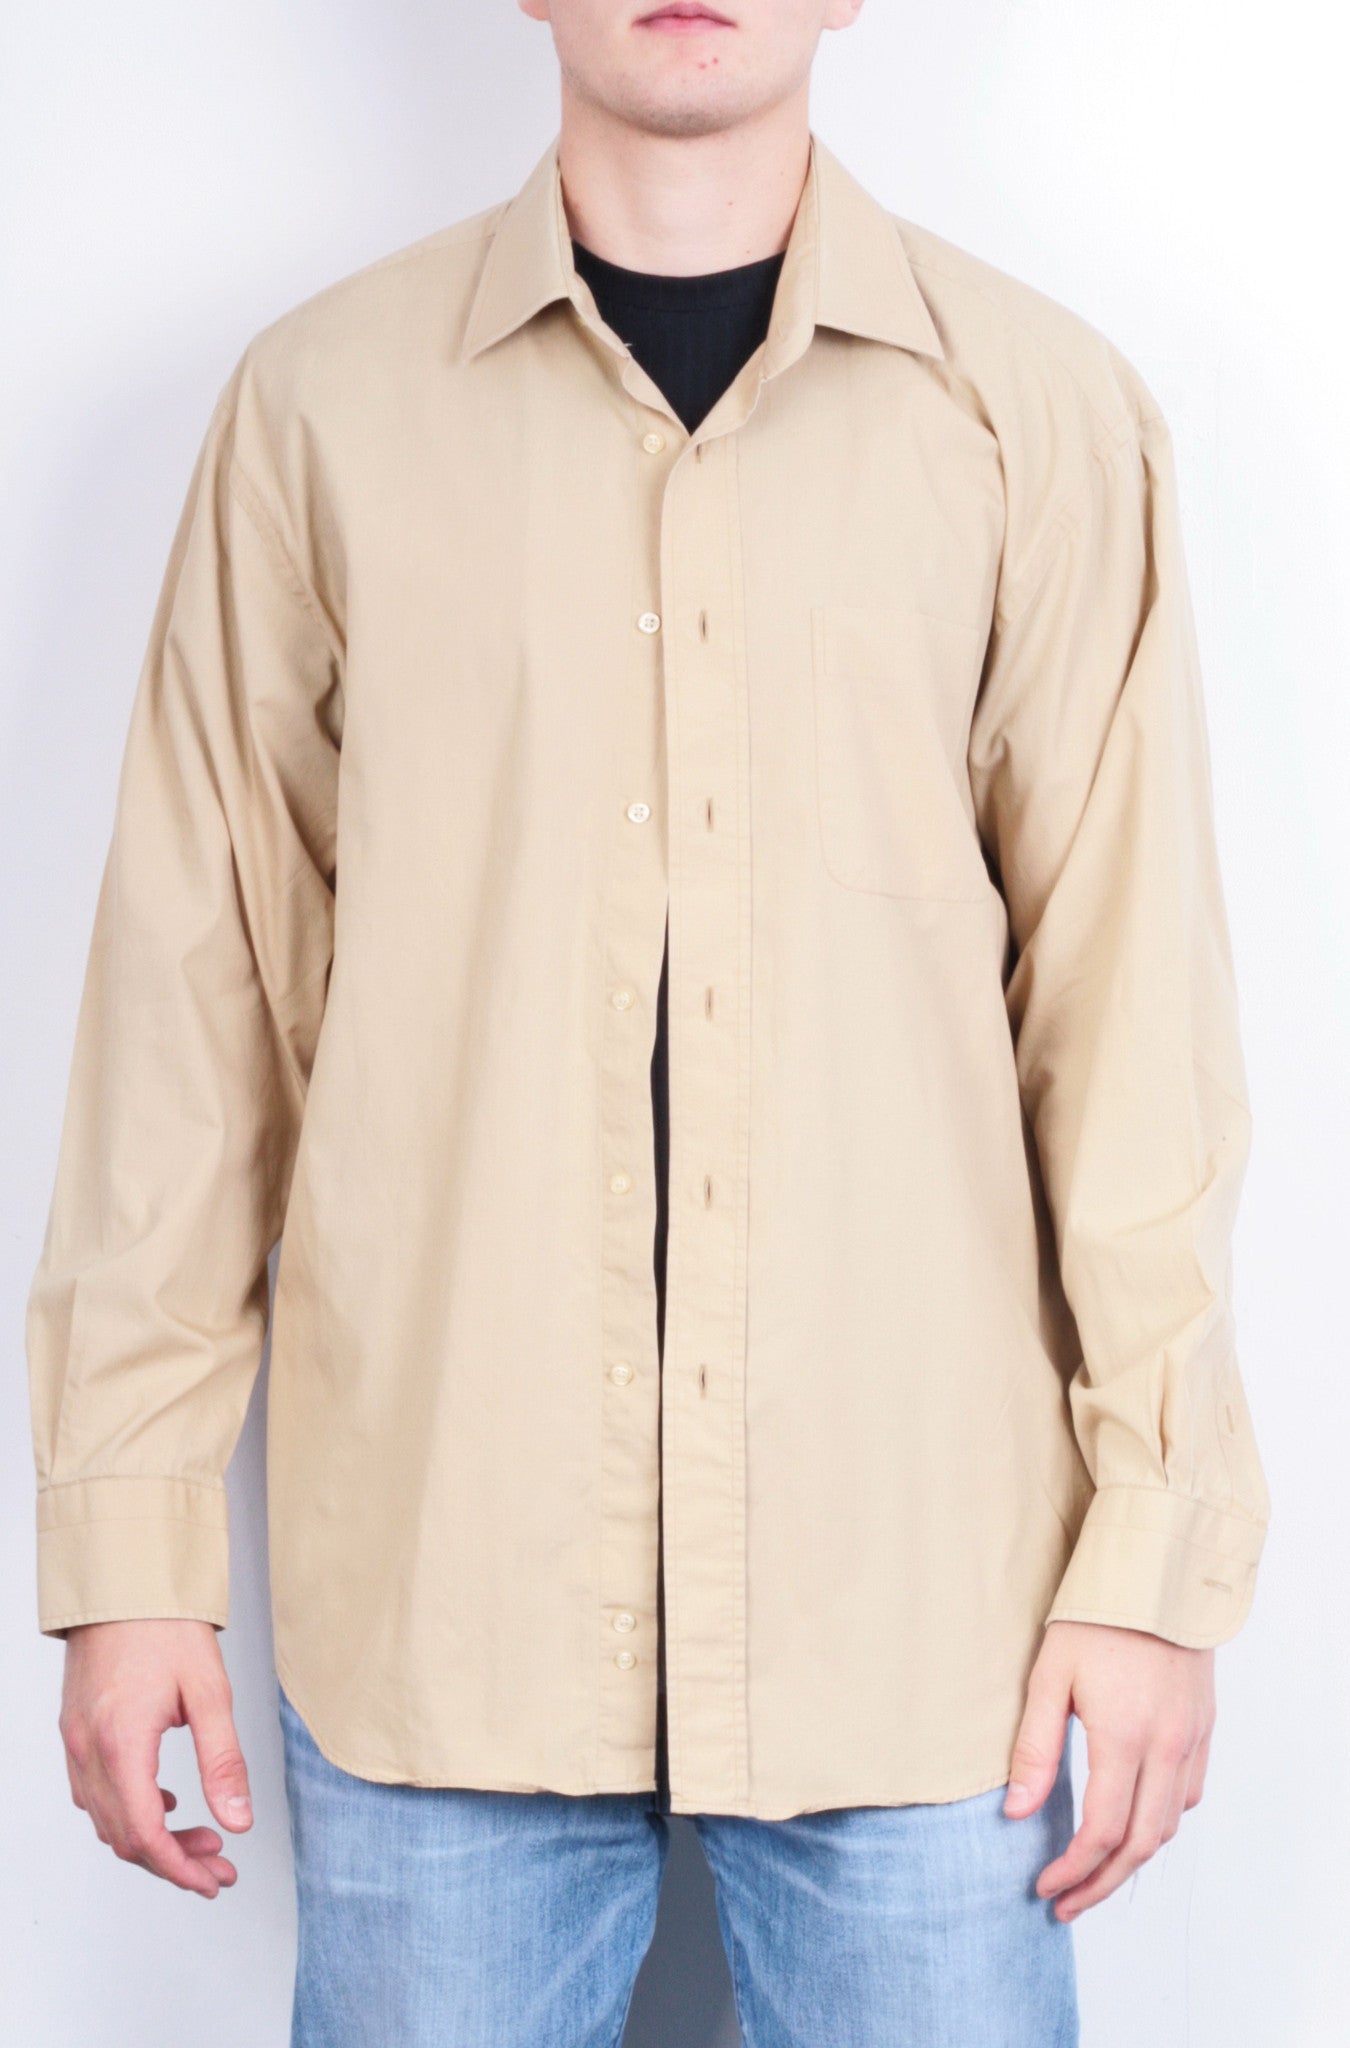 Feraud Paris Mens 44 17.5 Casual Shirt Beige Cotton – RetrospectClothes